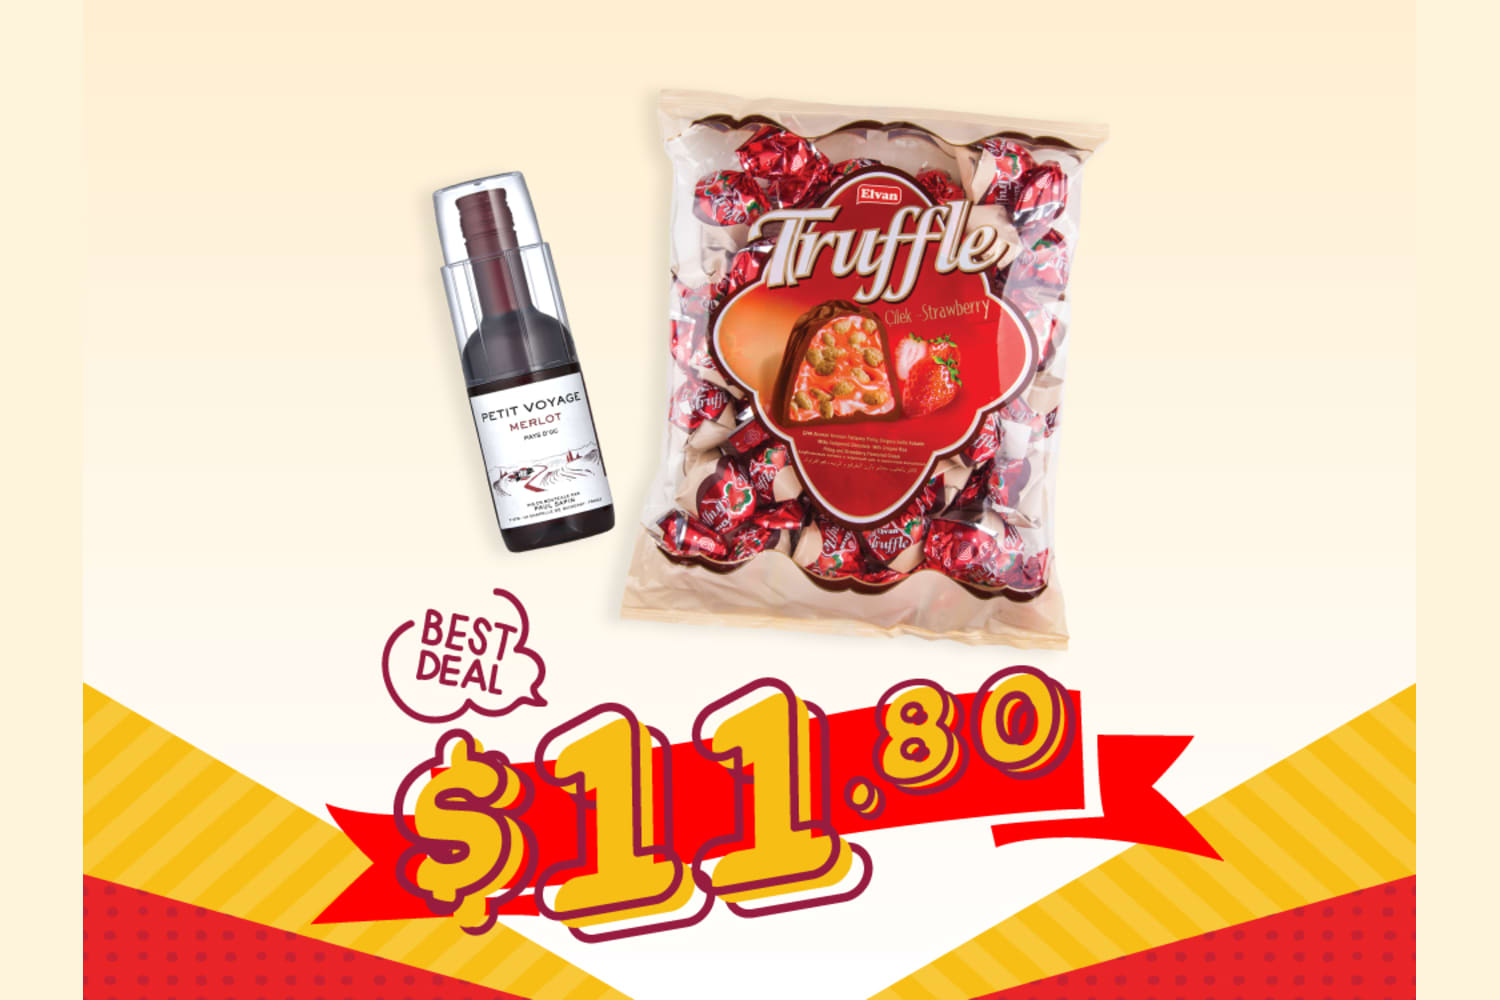 1 x Elvan Truffle Chocolate Bag & Red Wine Value Set [Limited Stock]